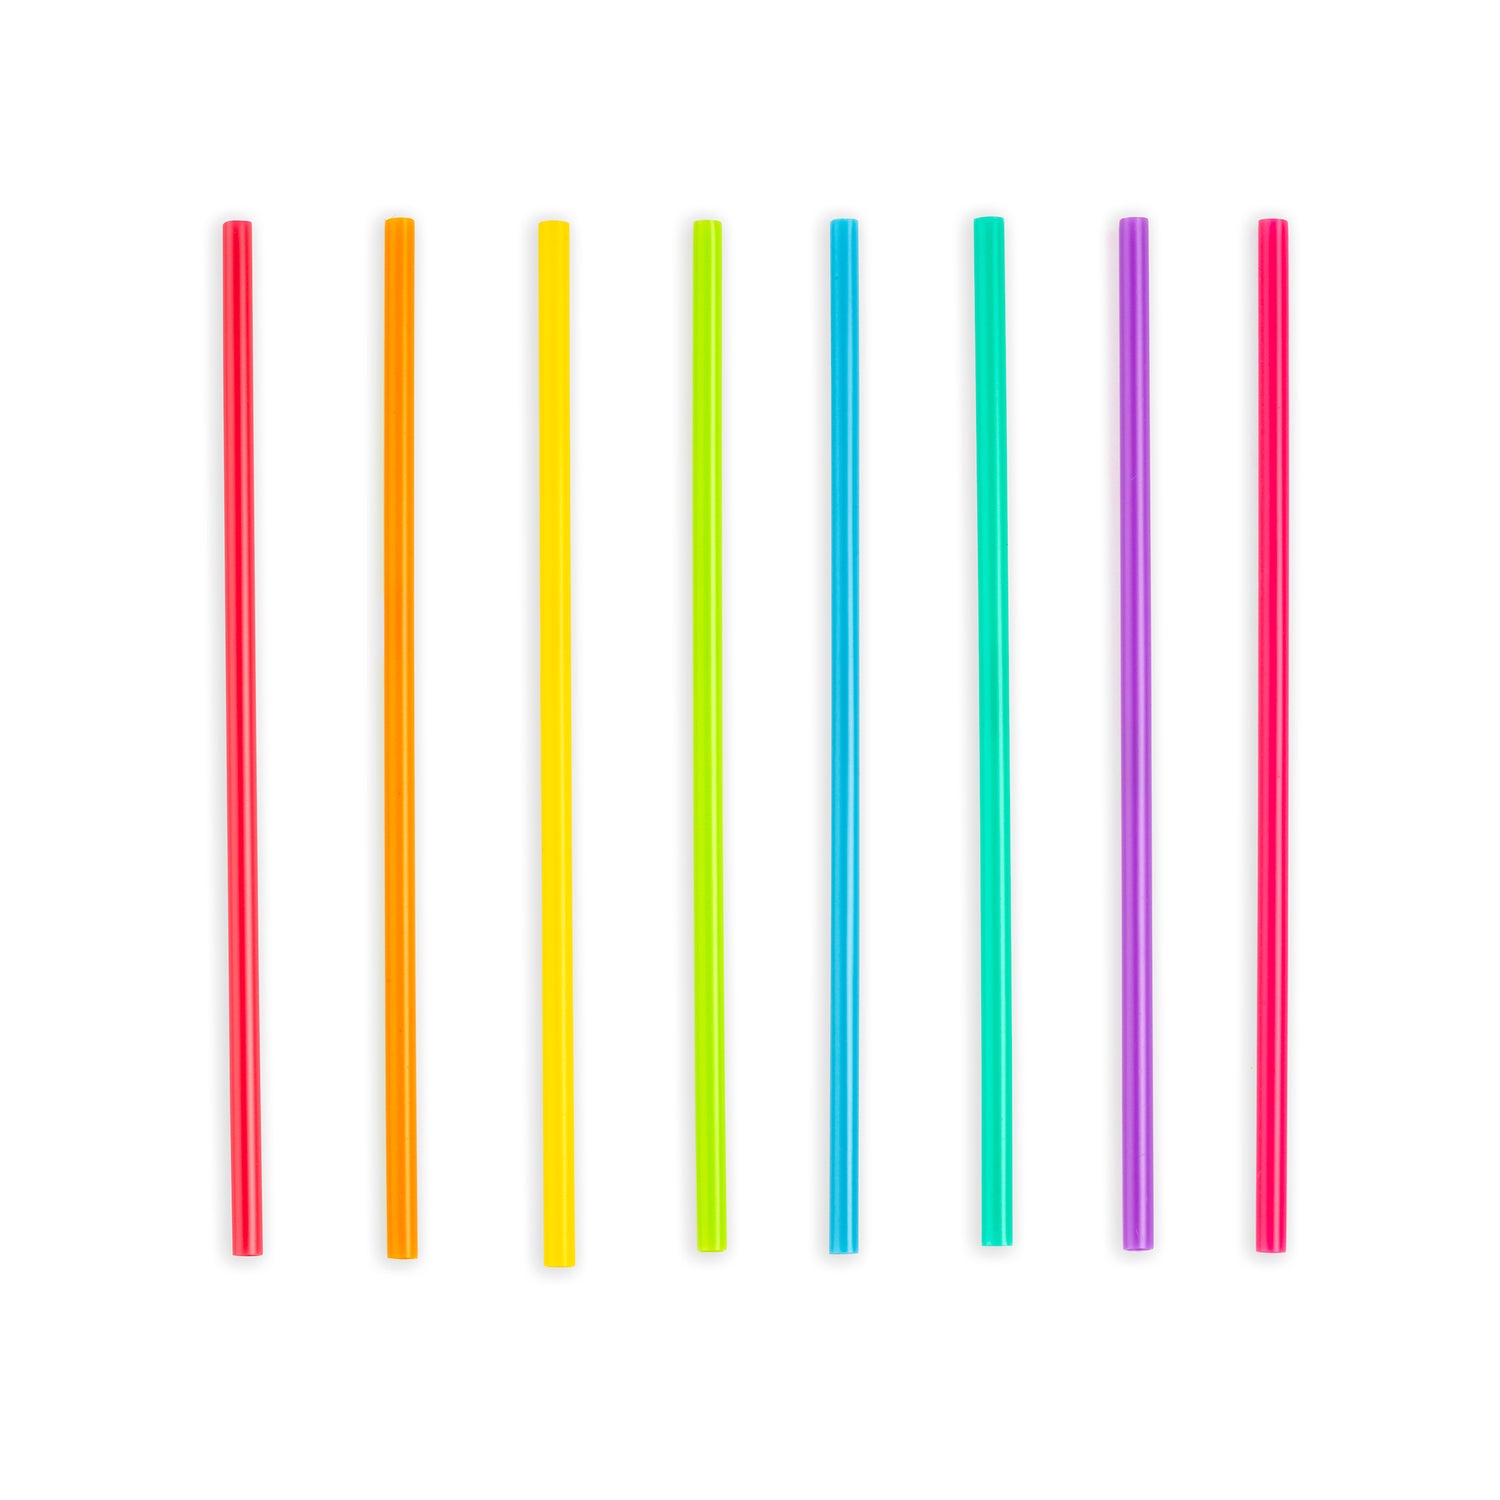 Award-Winning Design】Detachable Reusable Straw - One Pair Straw